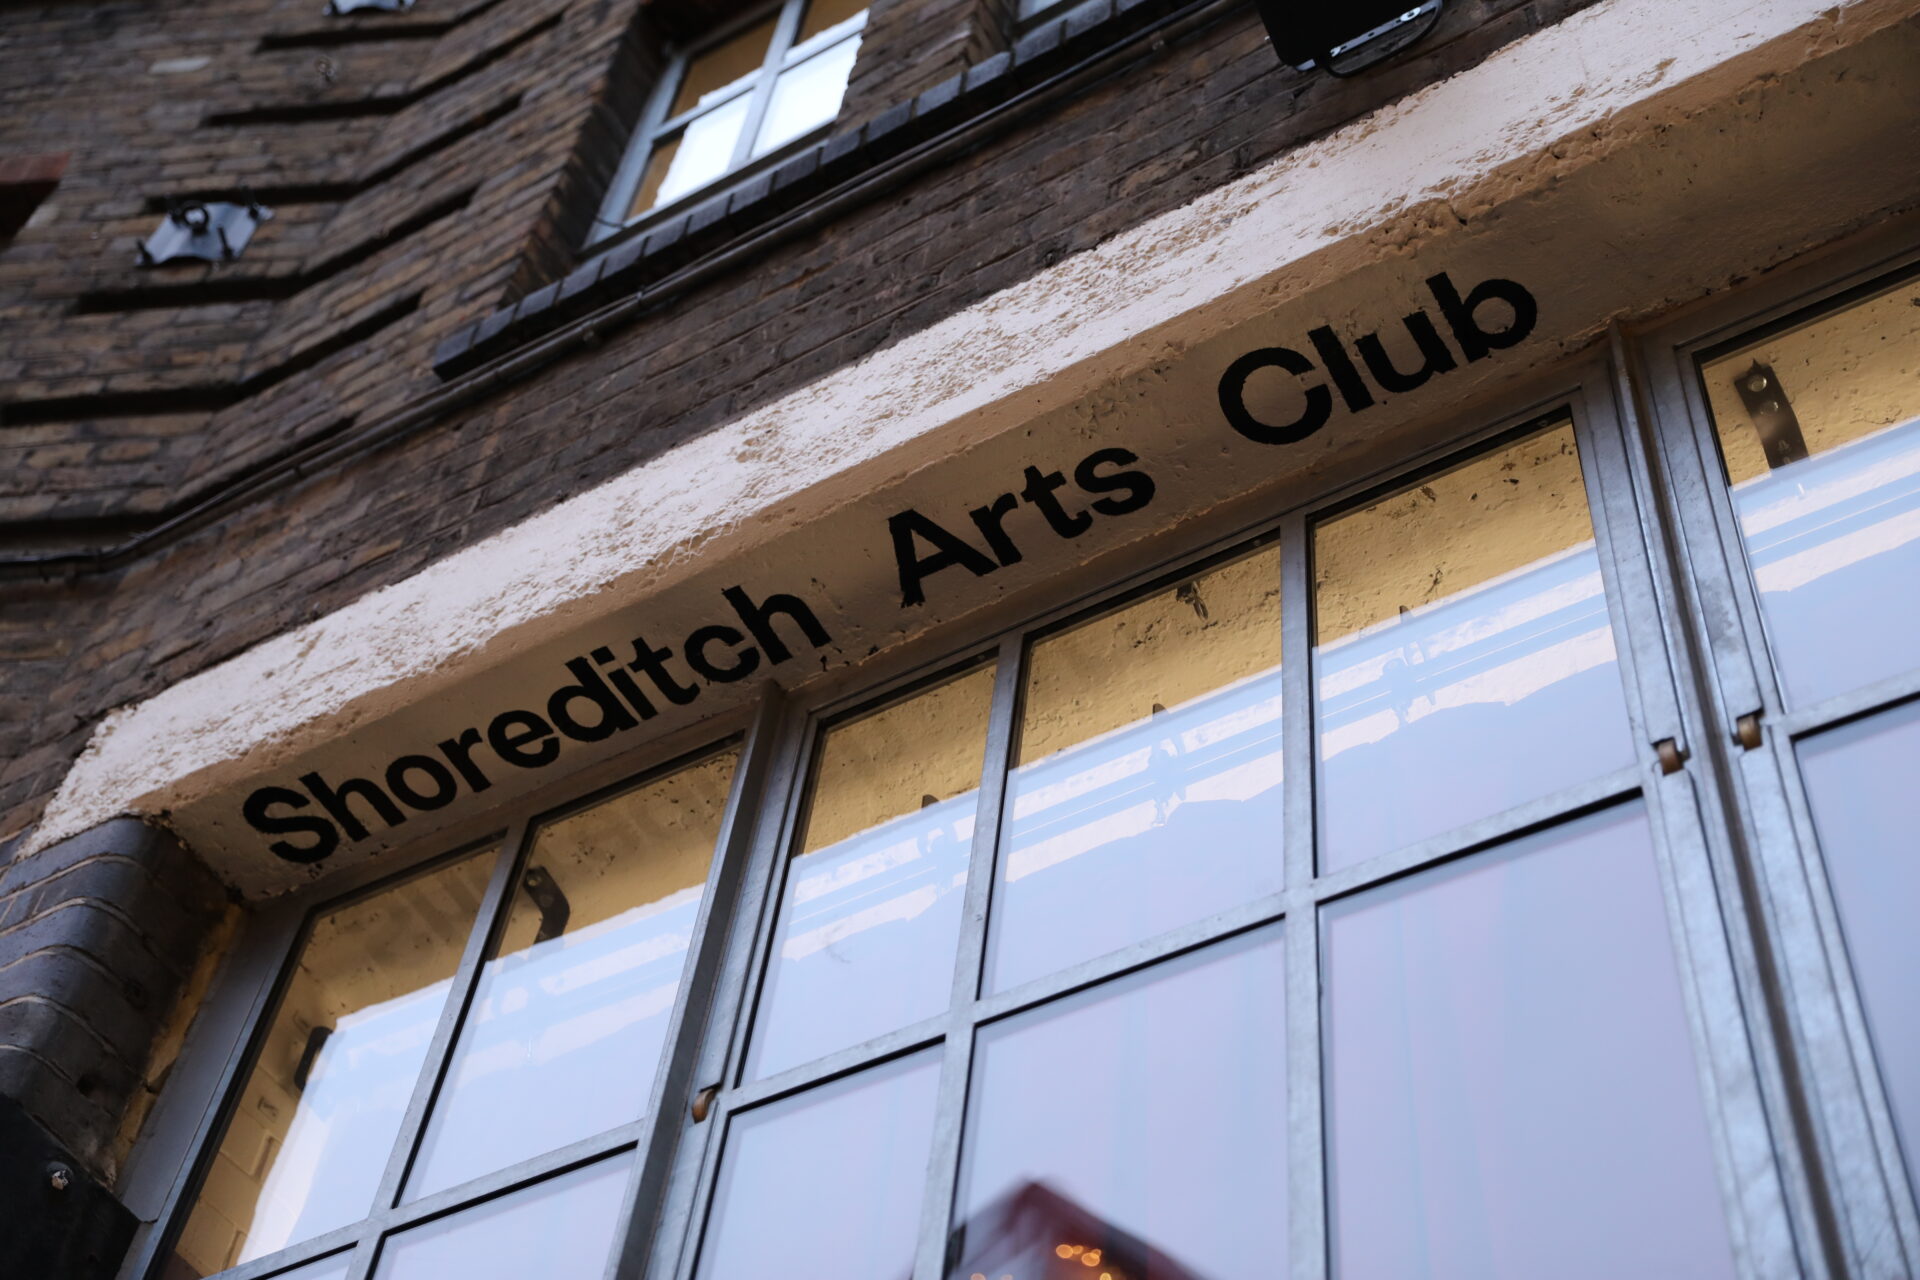 Shoreditch Arts Club sign writing on property